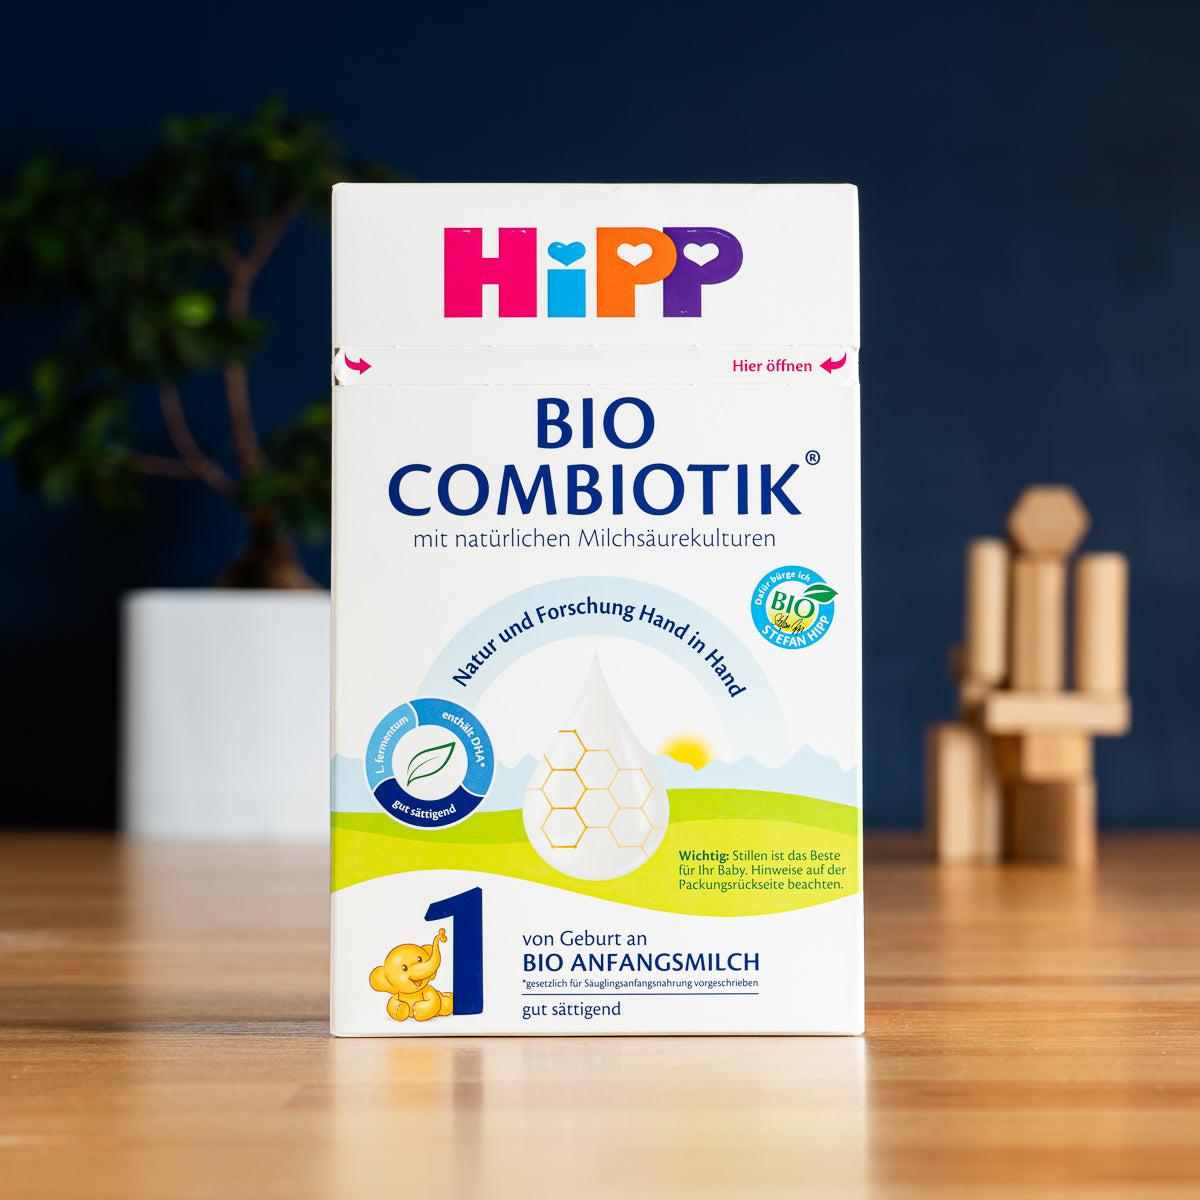 HiPP Stage 1 Organic Combiotic Infant Formula (600g) - German Version - 40 Boxes